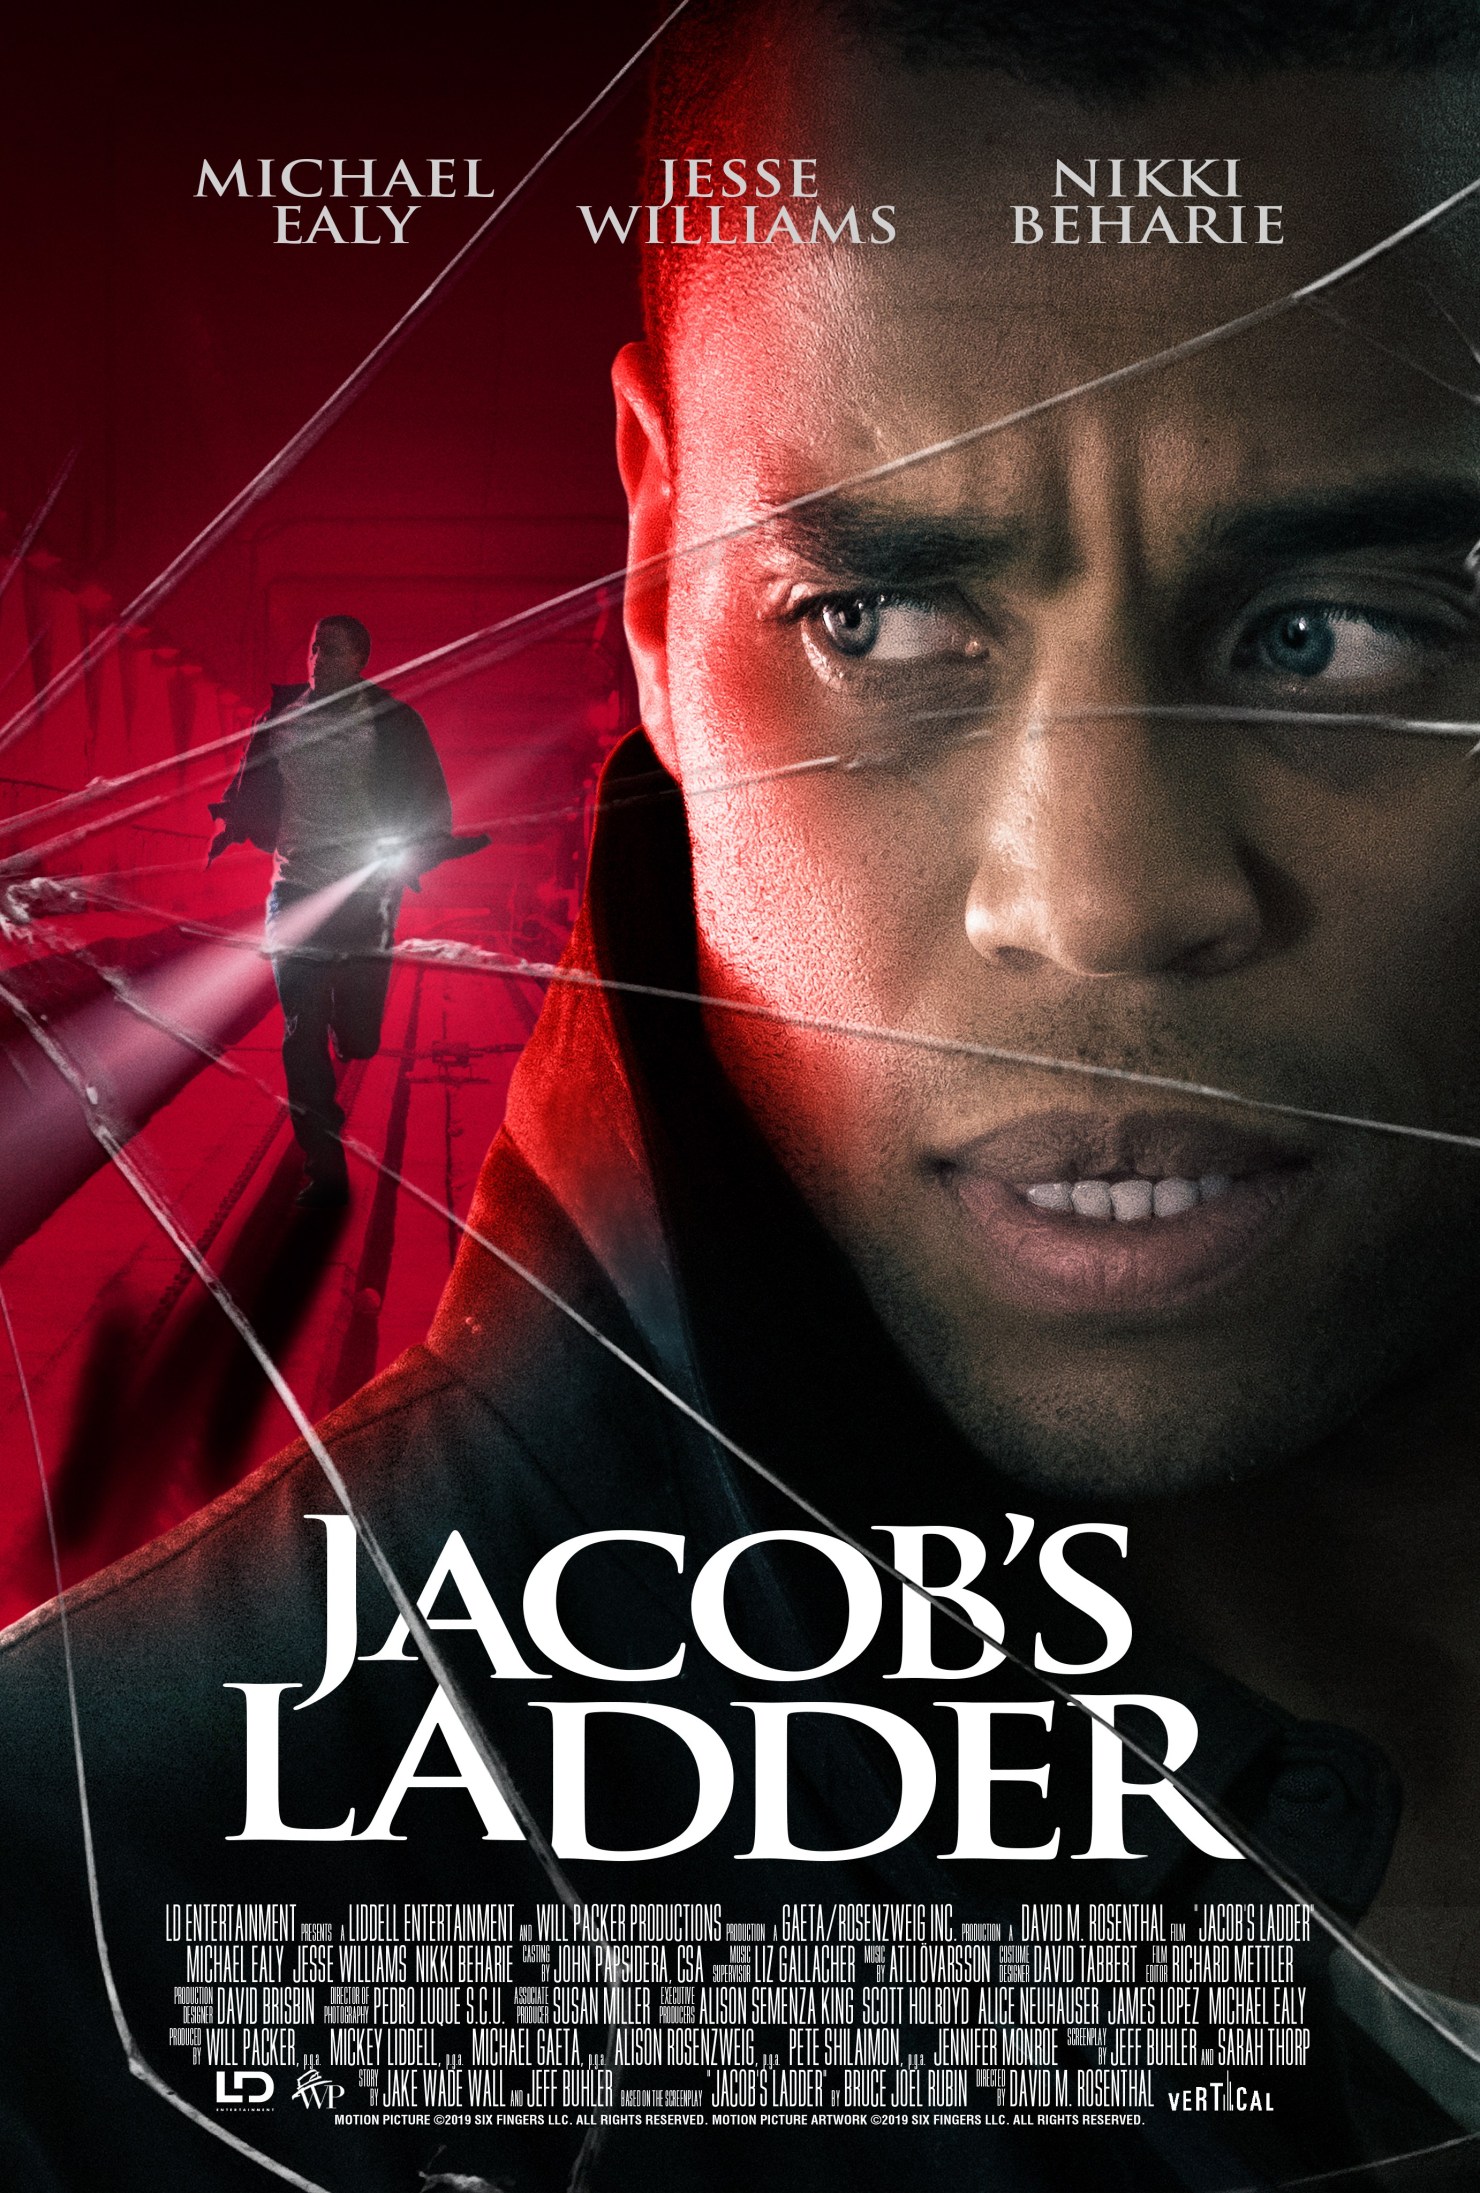 Nonton film Jacobs Ladder layarkaca21 indoxx1 ganool online streaming terbaru